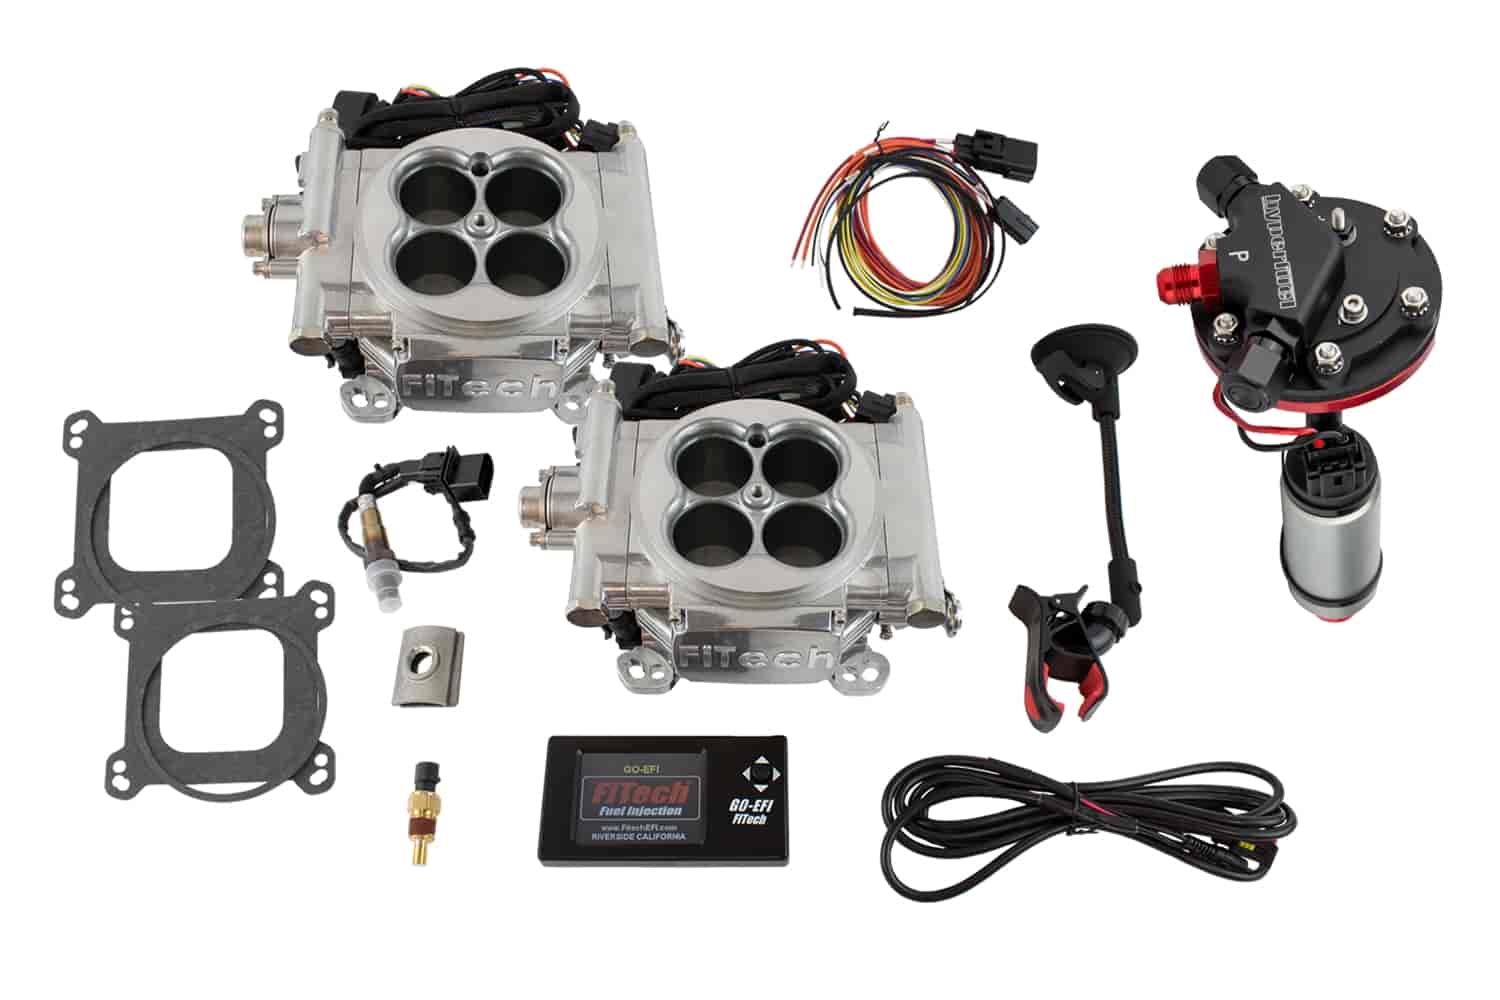 Go EFI 2x4 625 HP Dual Quad Throttle Body System Master Kit Includes: Hy-Fuel Tight-Fit In-Tank Retrofit Kit